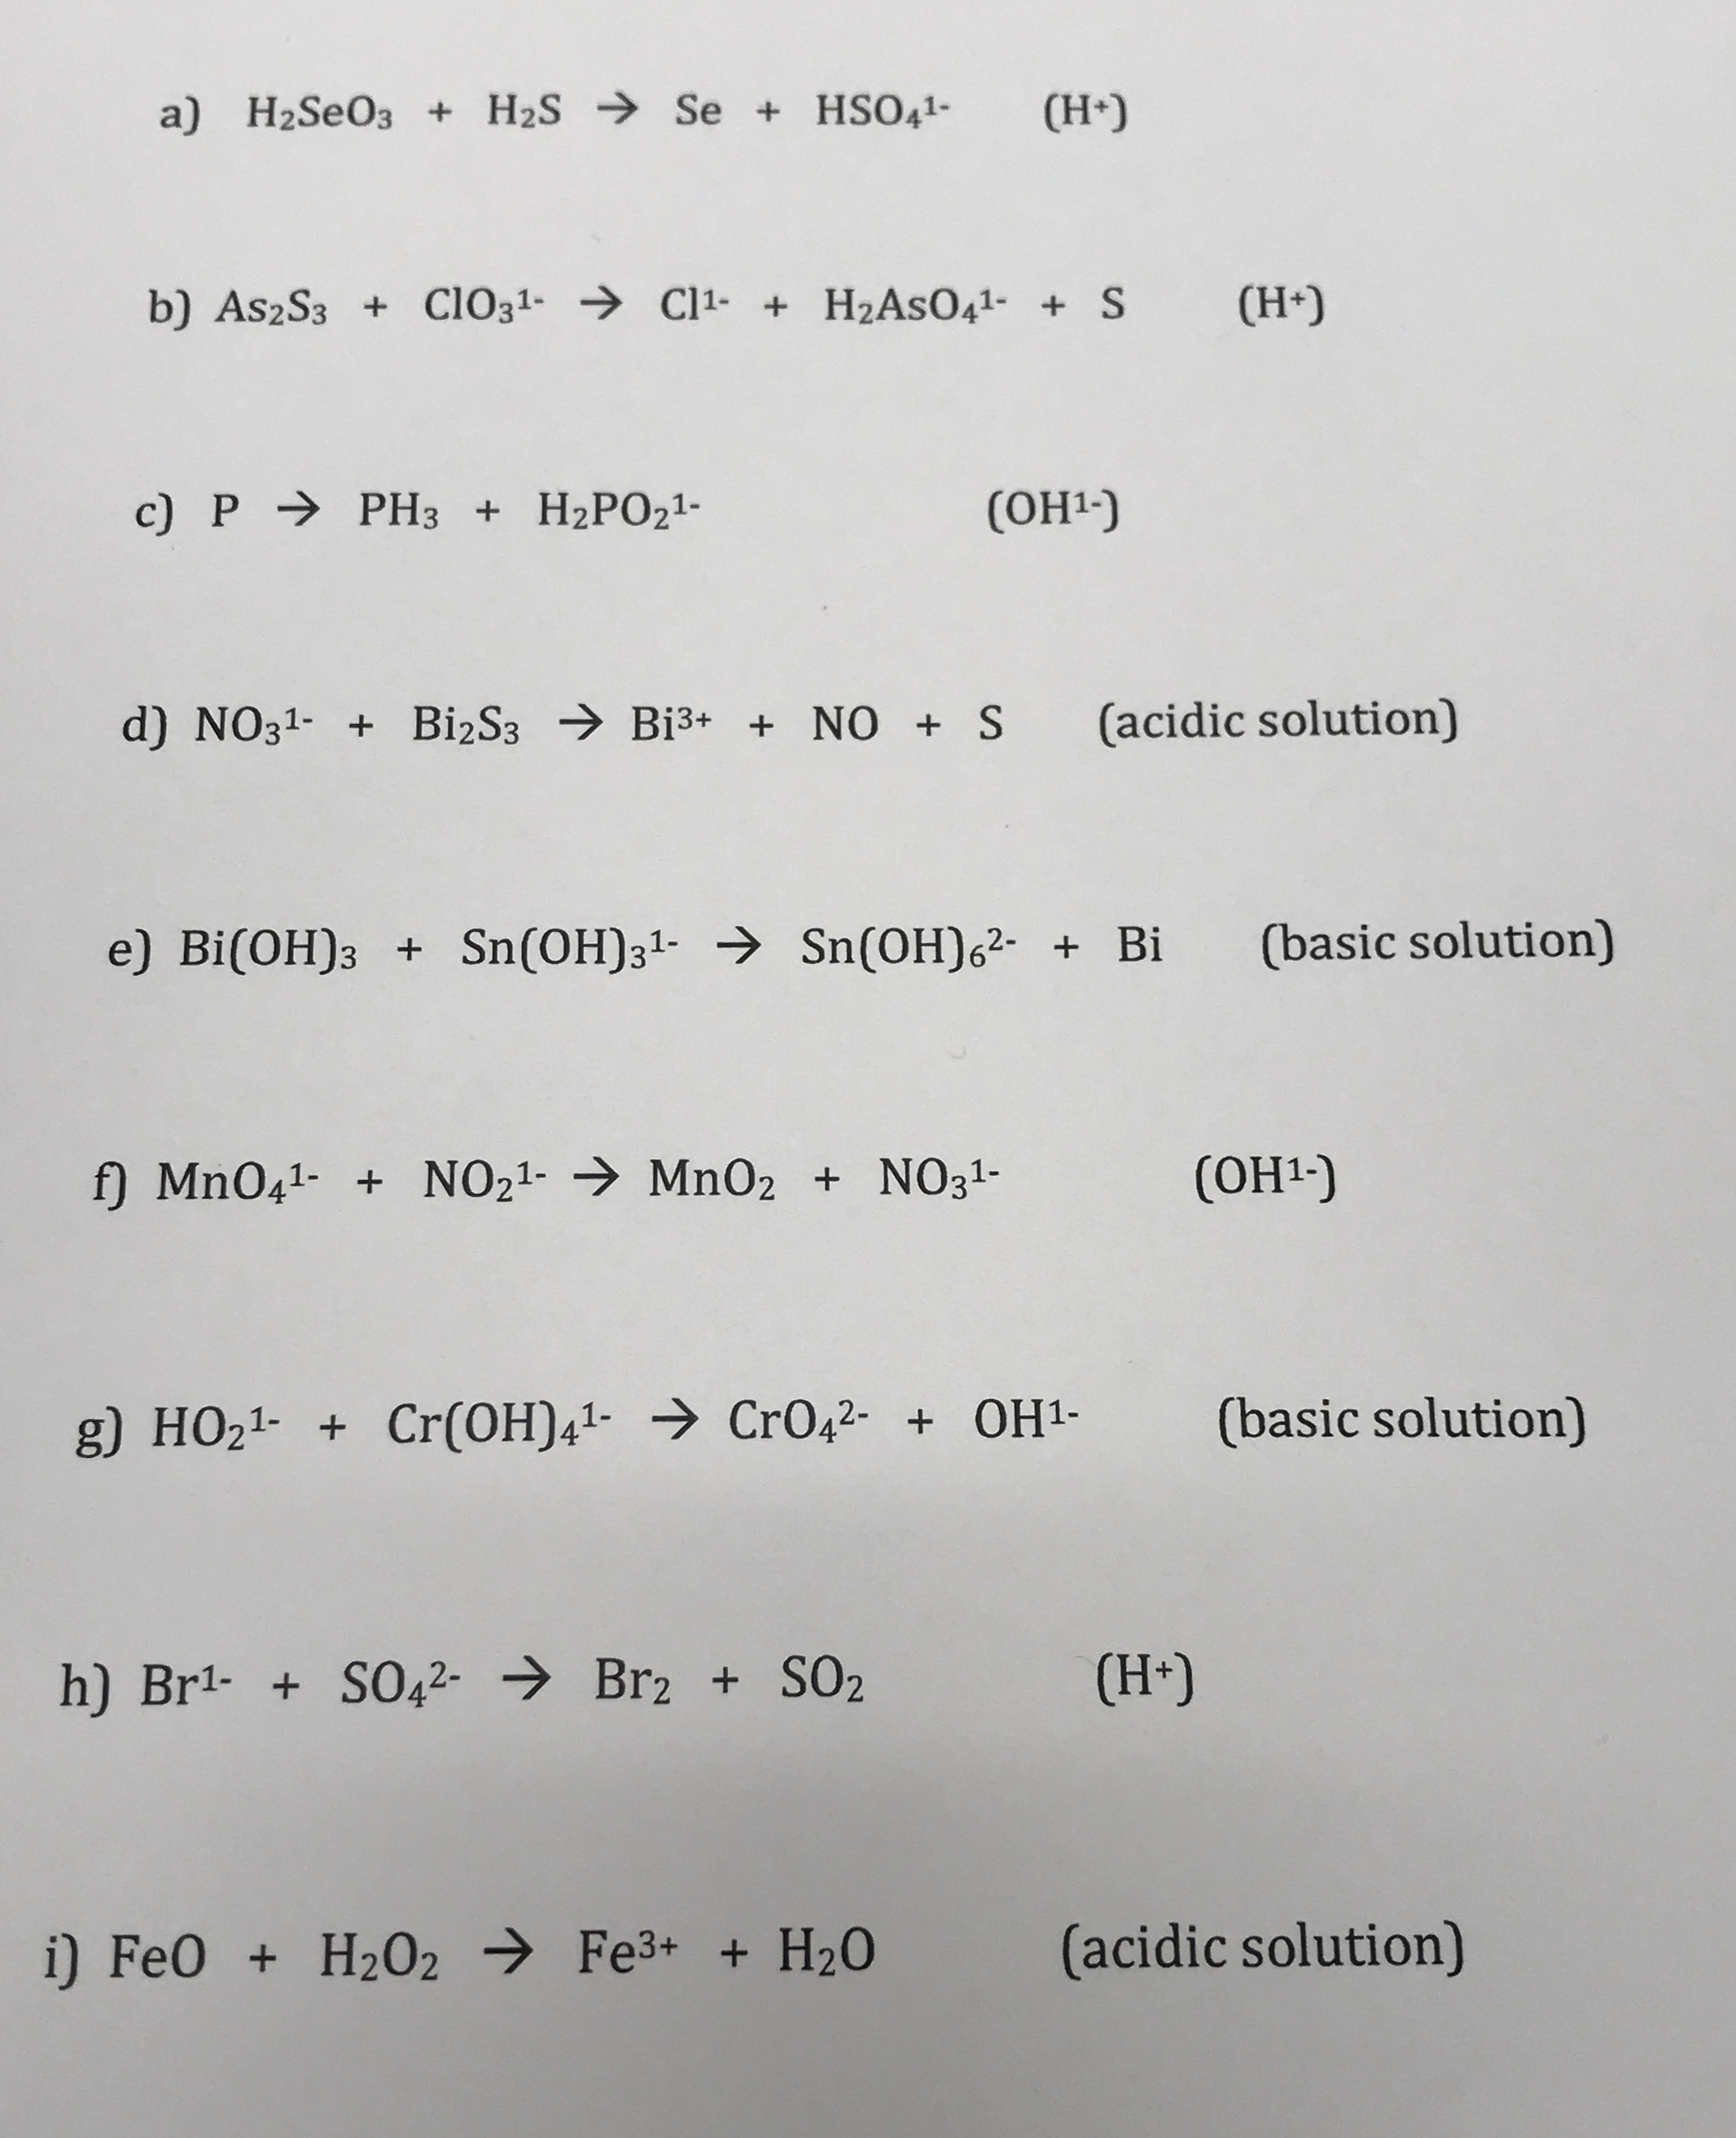 a) H2SEO3 + H2S Se + HSO41-
(H*)
b) As2S3 + CiO31- → Cl1- + H2ASO41- + S
(H*)
с) P > PНз + H2РО21-
(ОН-)
d) NO31- + BizS3 → Bi3+ + NO + S
(acidic solution)
e) Bi(OH)3 + Sn(OH)31- → Sn(OH)6²- + Bi
(basic solution)
f) MnO41- + NO21- → Mn02 + NO31-
(ОН-)
g) HO21- + Cr(OH)41- → Cr042- + OH1-
(basic solution)
h) Br1- + S042- → Br2 + SO2
(H+)
i) FeO + H202 → Fe3+ + H2O
(acidic solution)
